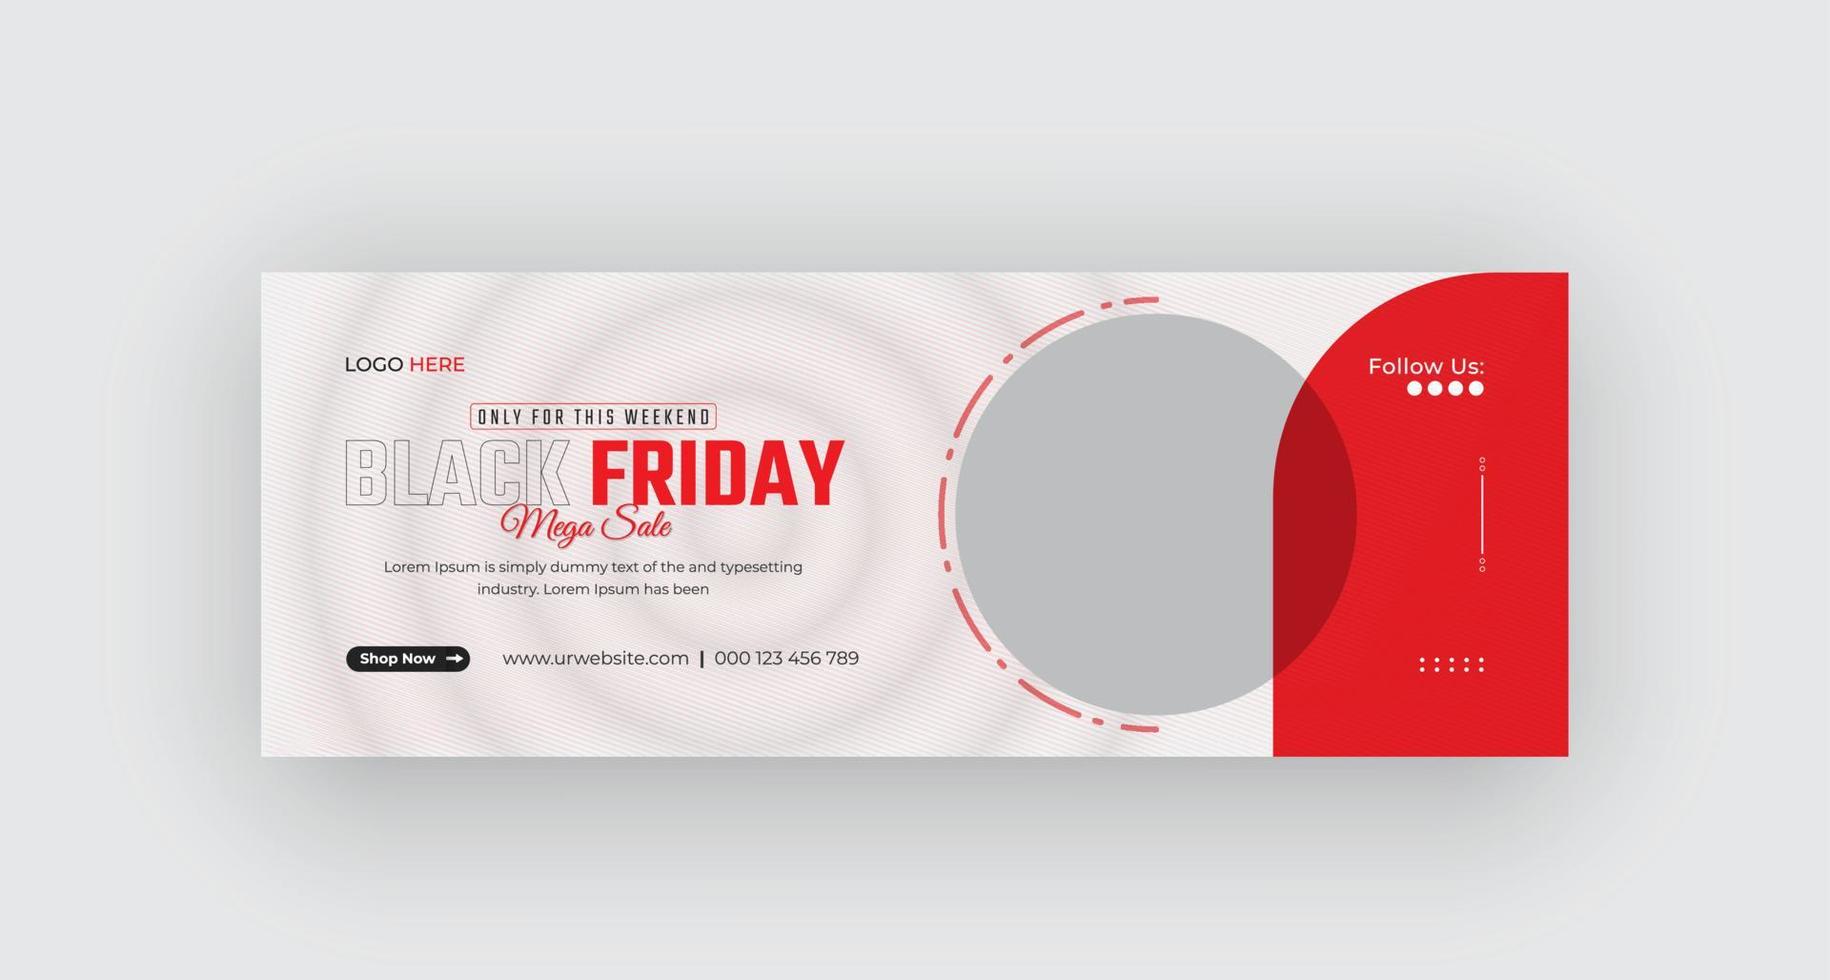 black friday timeline cover venda de fim de semana design de banner de mídia social download profissional vetor